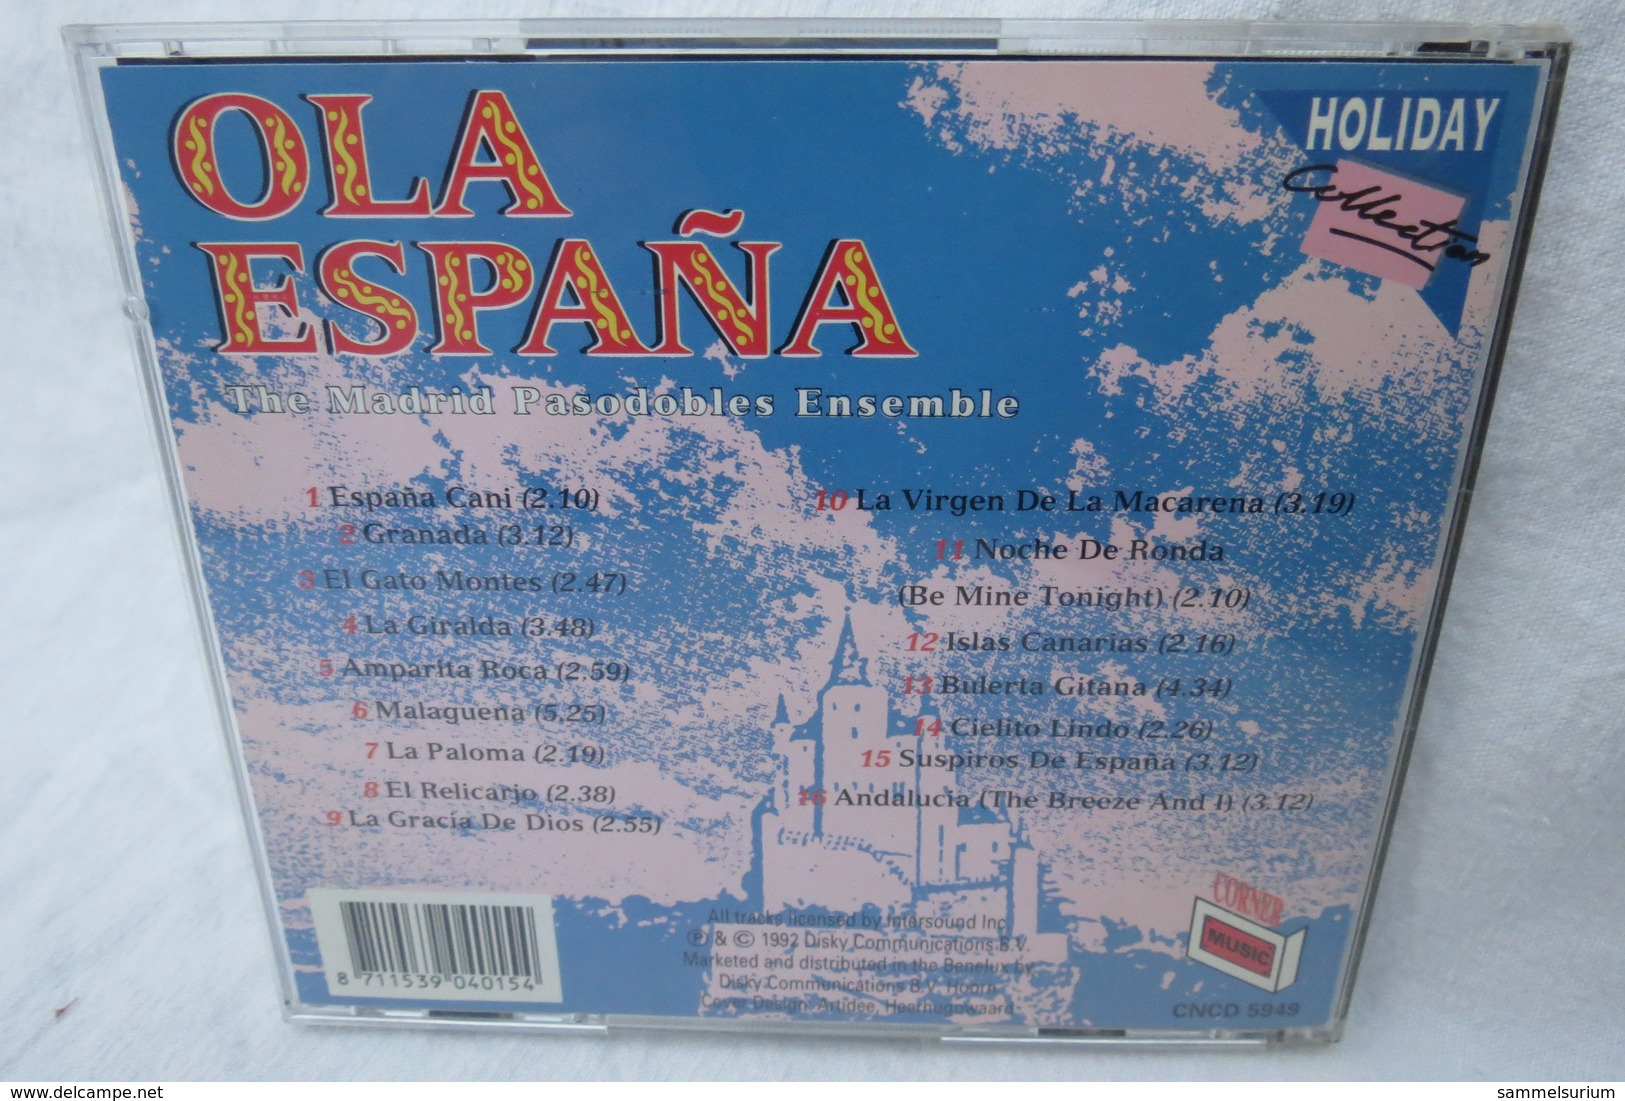 CD "The Madrid Pasodobles Ensemble" Ola Espana - Sonstige - Spanische Musik